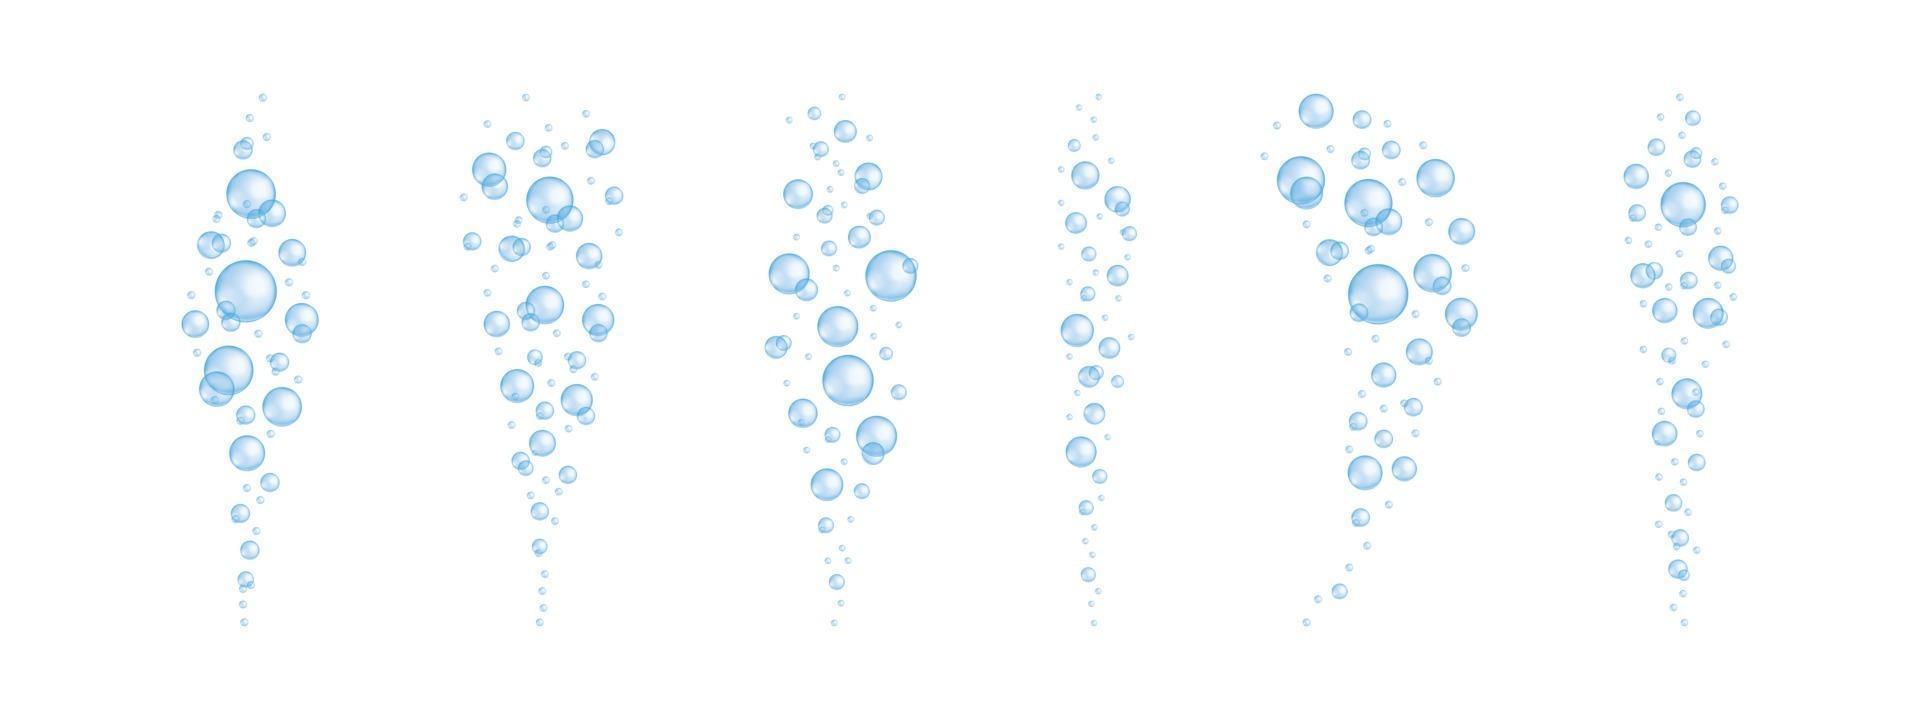 Blue underwater oxygen bubbles set. Soap or cleanser foam, aquarium or sea water stream texture, bath sud, fizzy carbonated drink effect vector